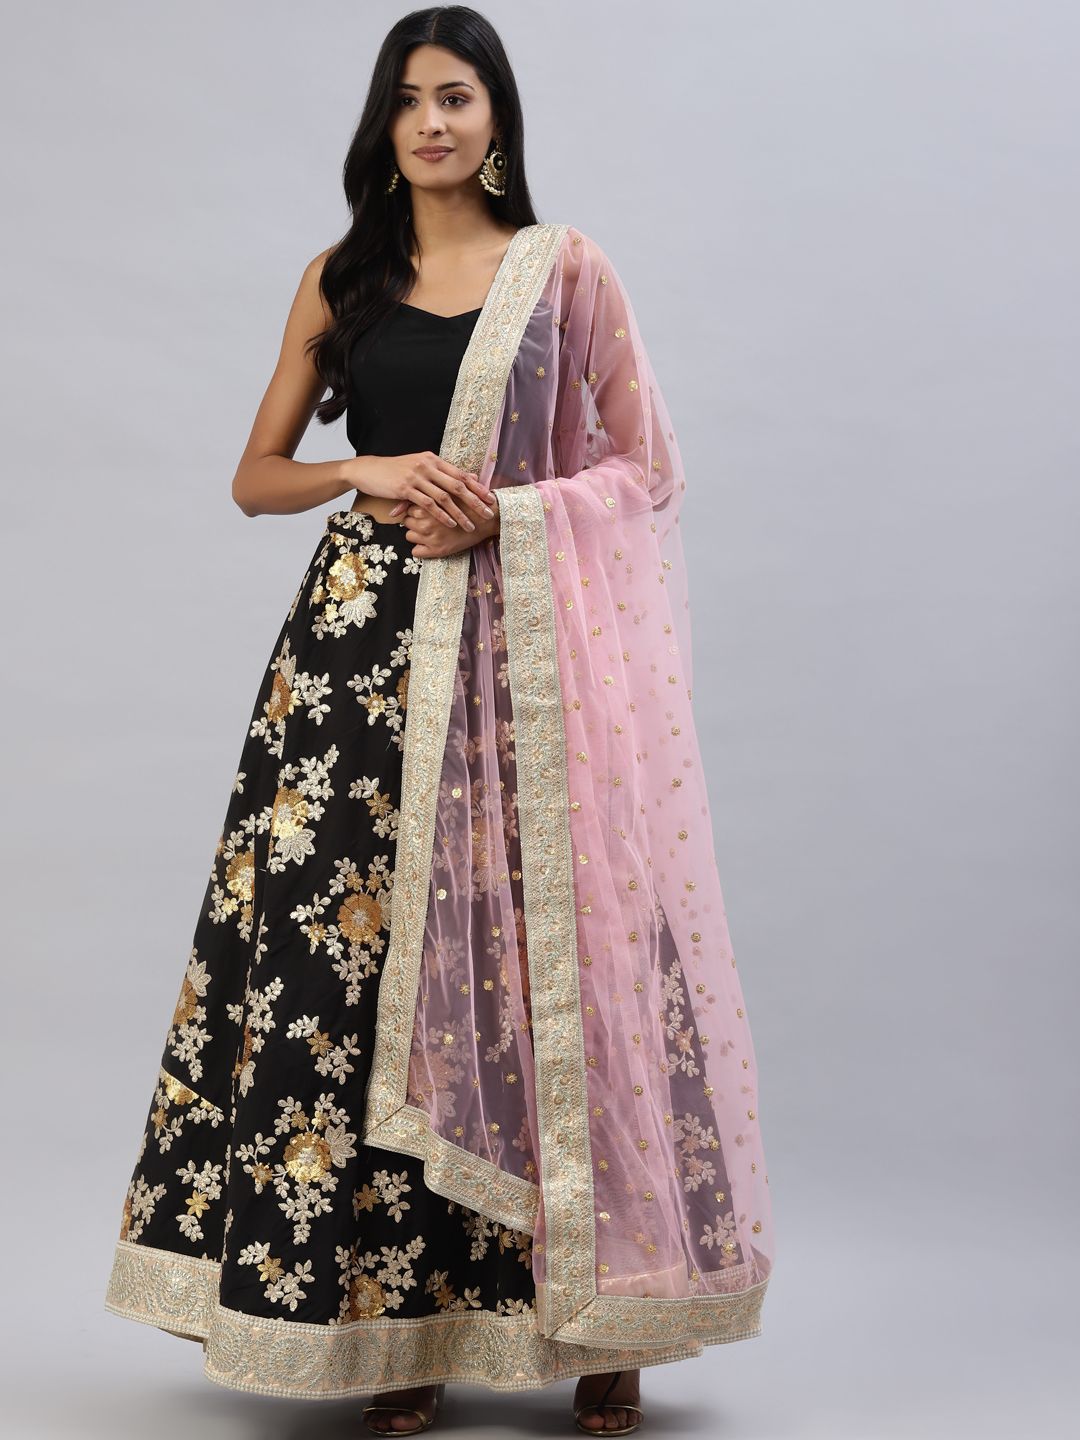 Readiprint Fashions Black & Pink Embroidered Lehenga & Choli With Dupatta Price in India